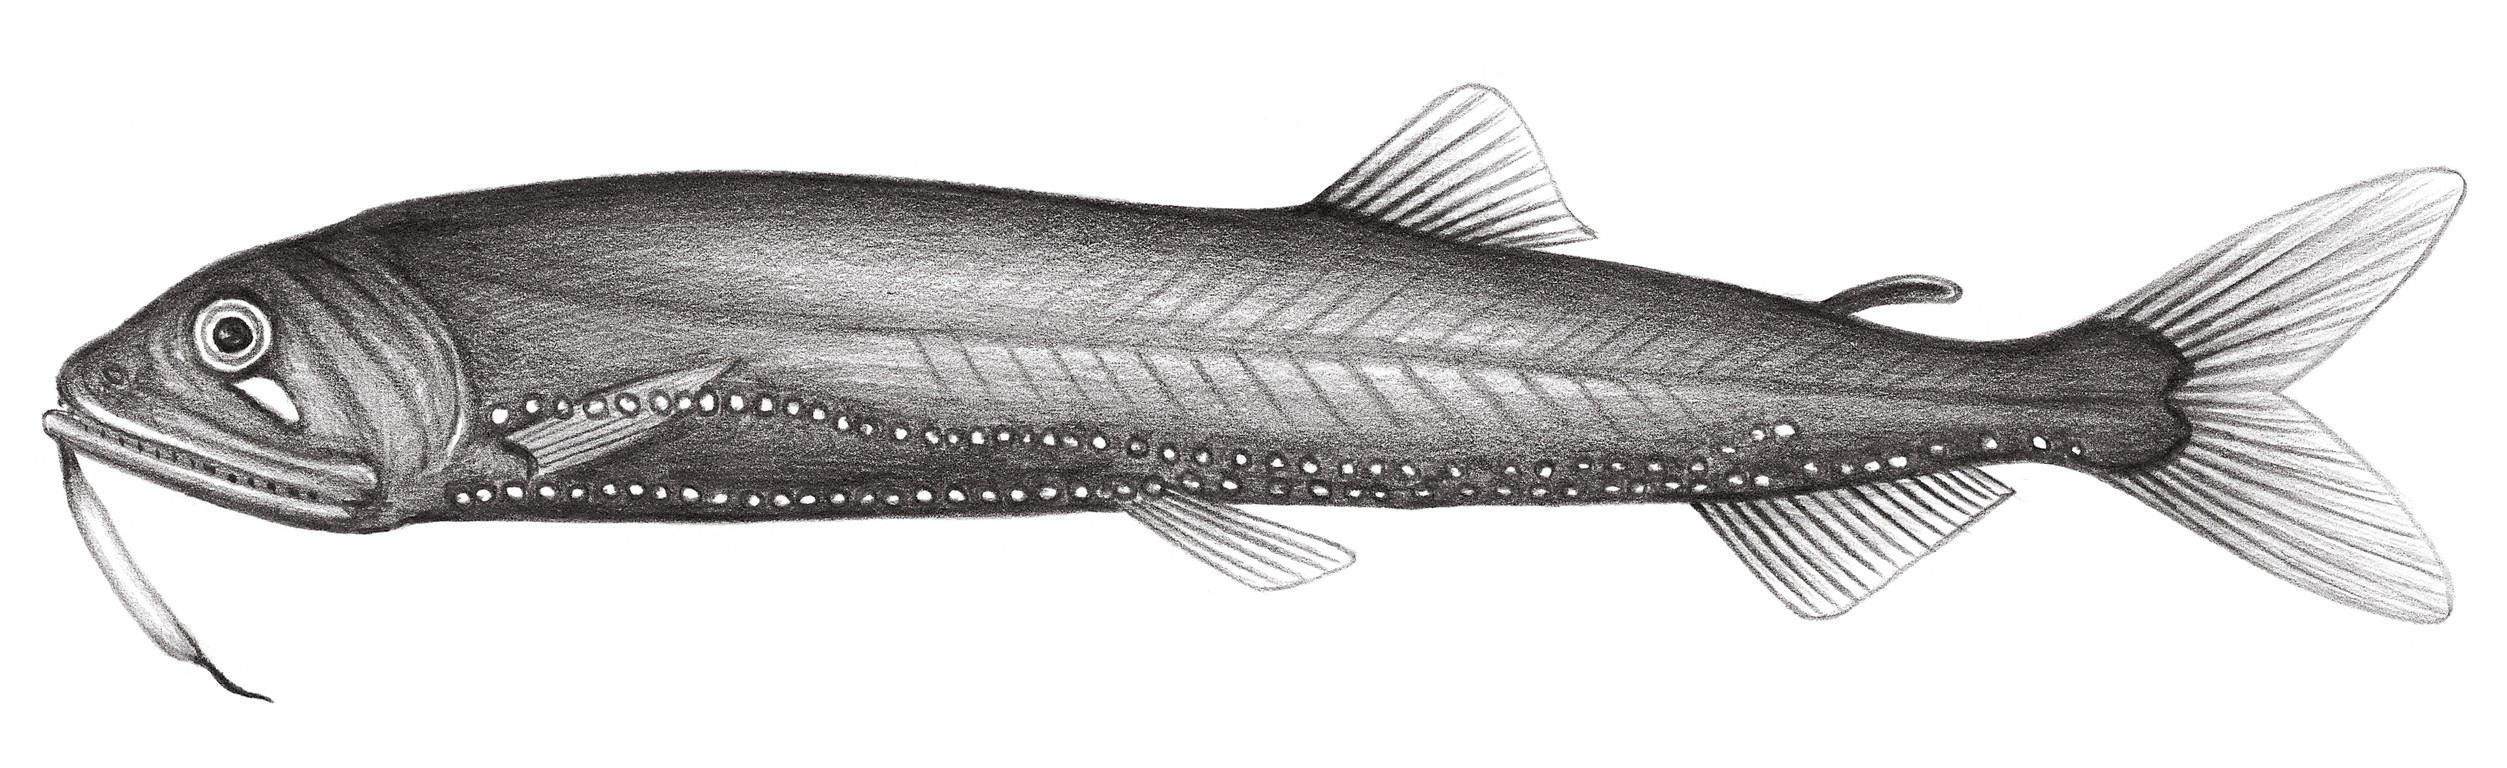 436.	真芒食星魚 Eupogonesthes xeniscus Parin & Borodulina, 1993